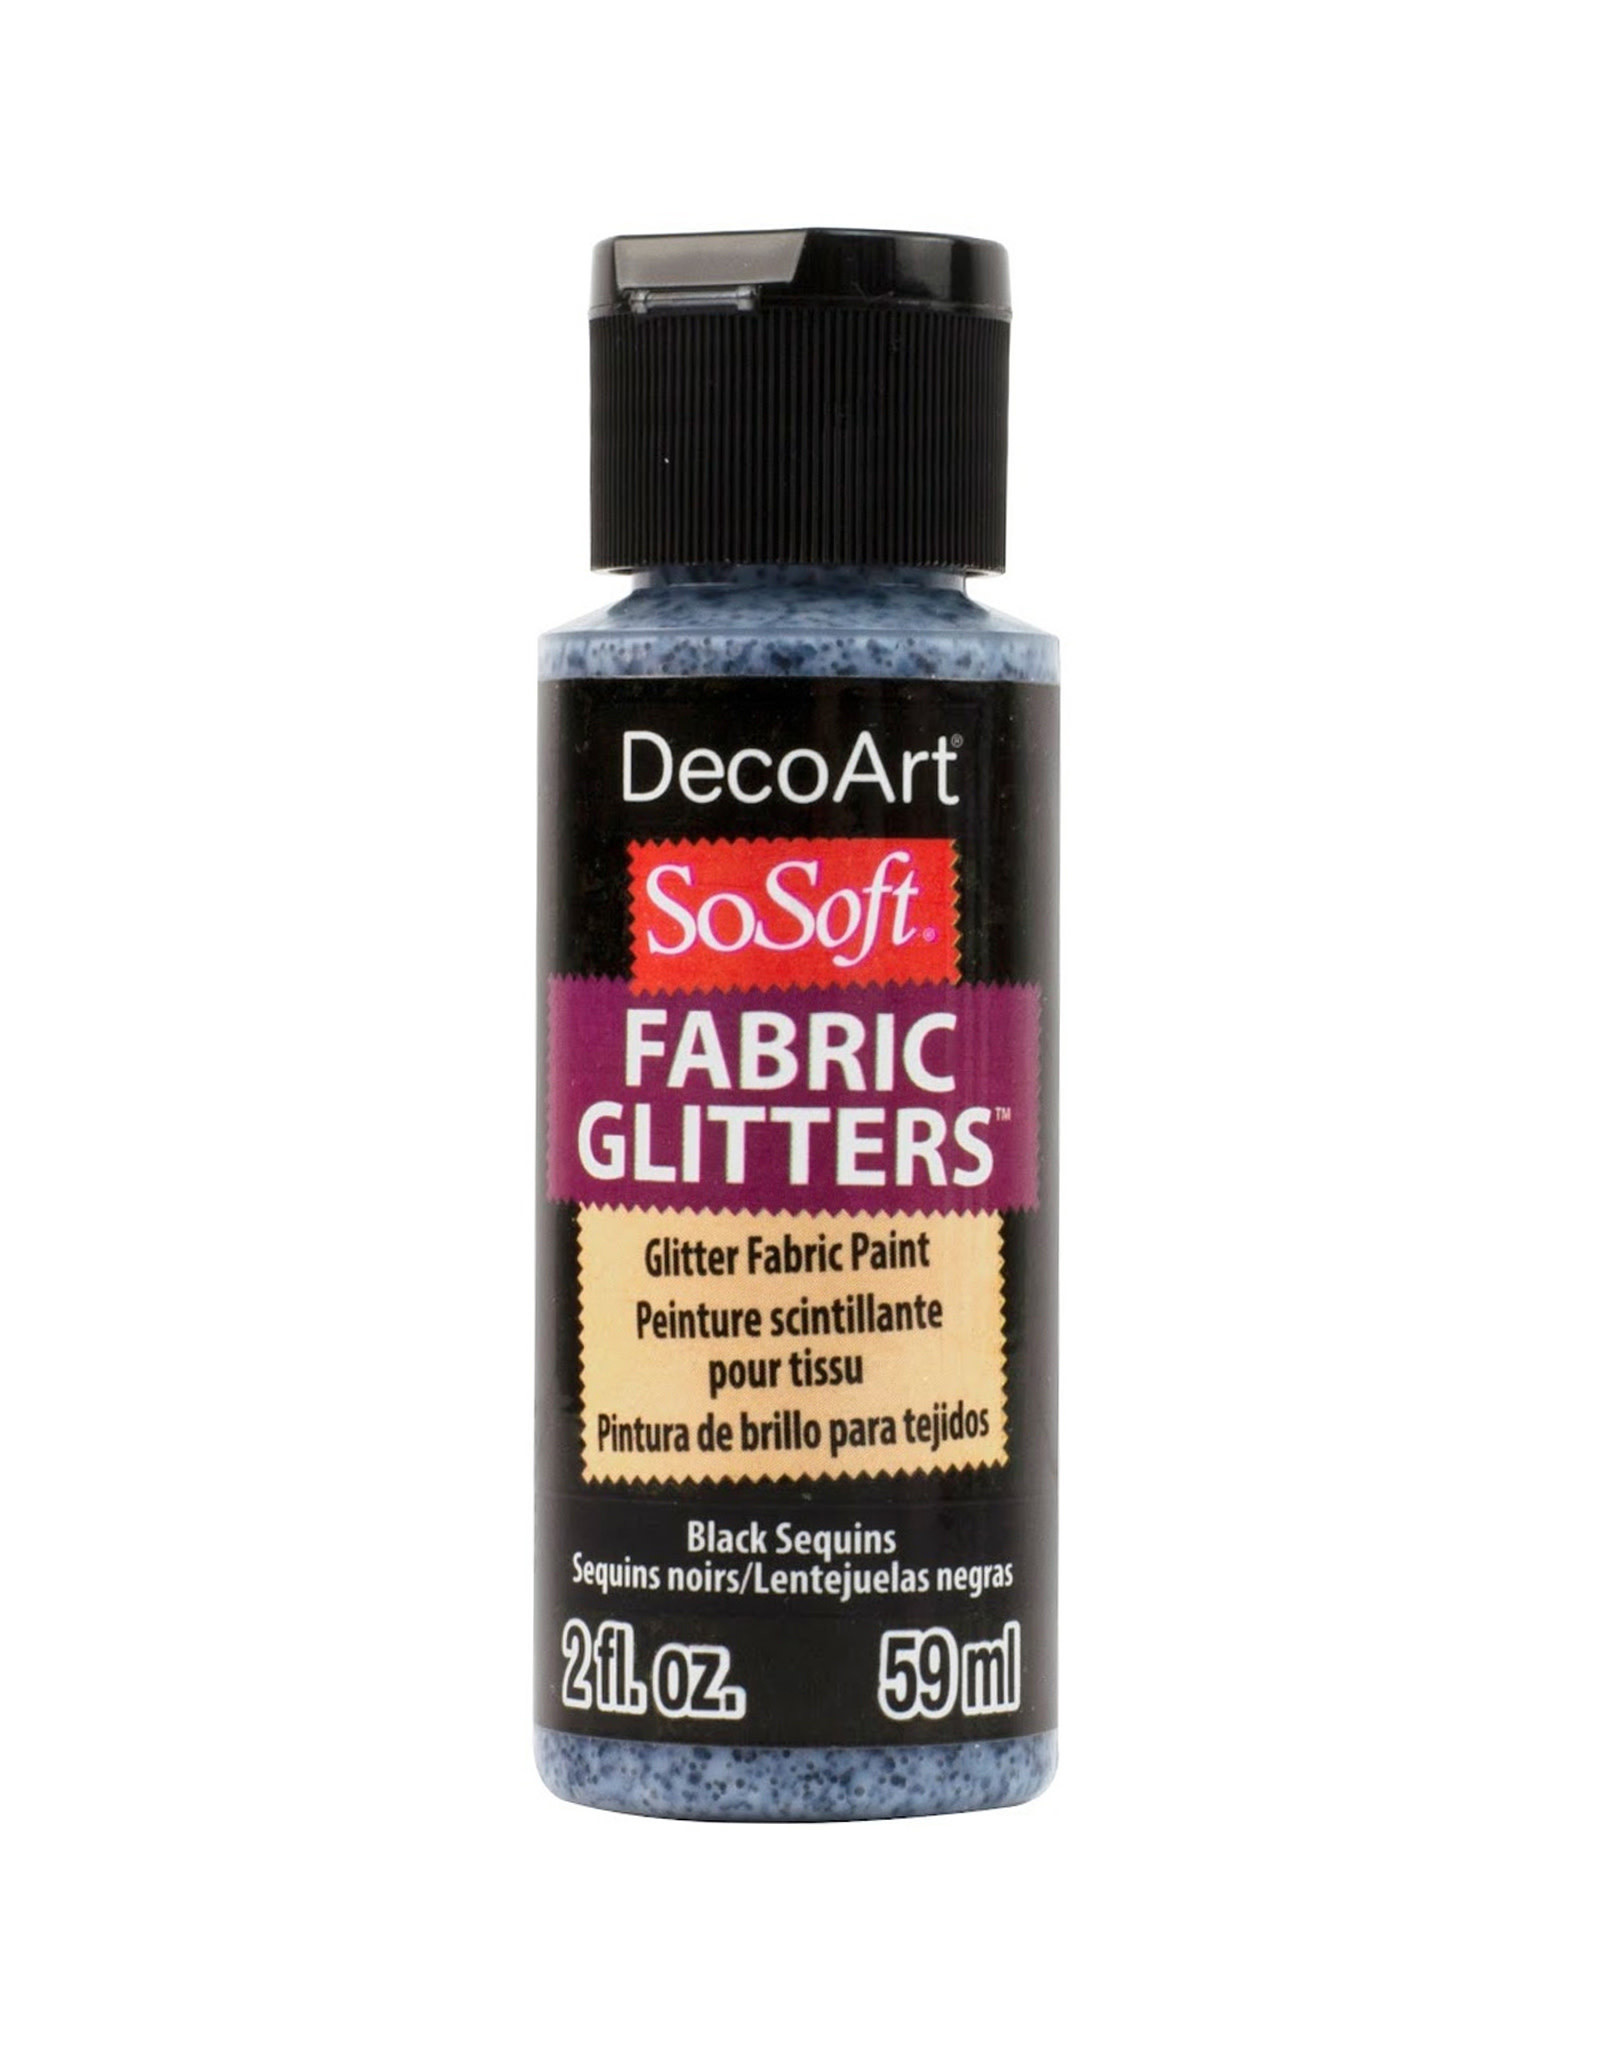 DecoArt DecoArt SoSoft Fabric Glitters, Black Sequins 2oz